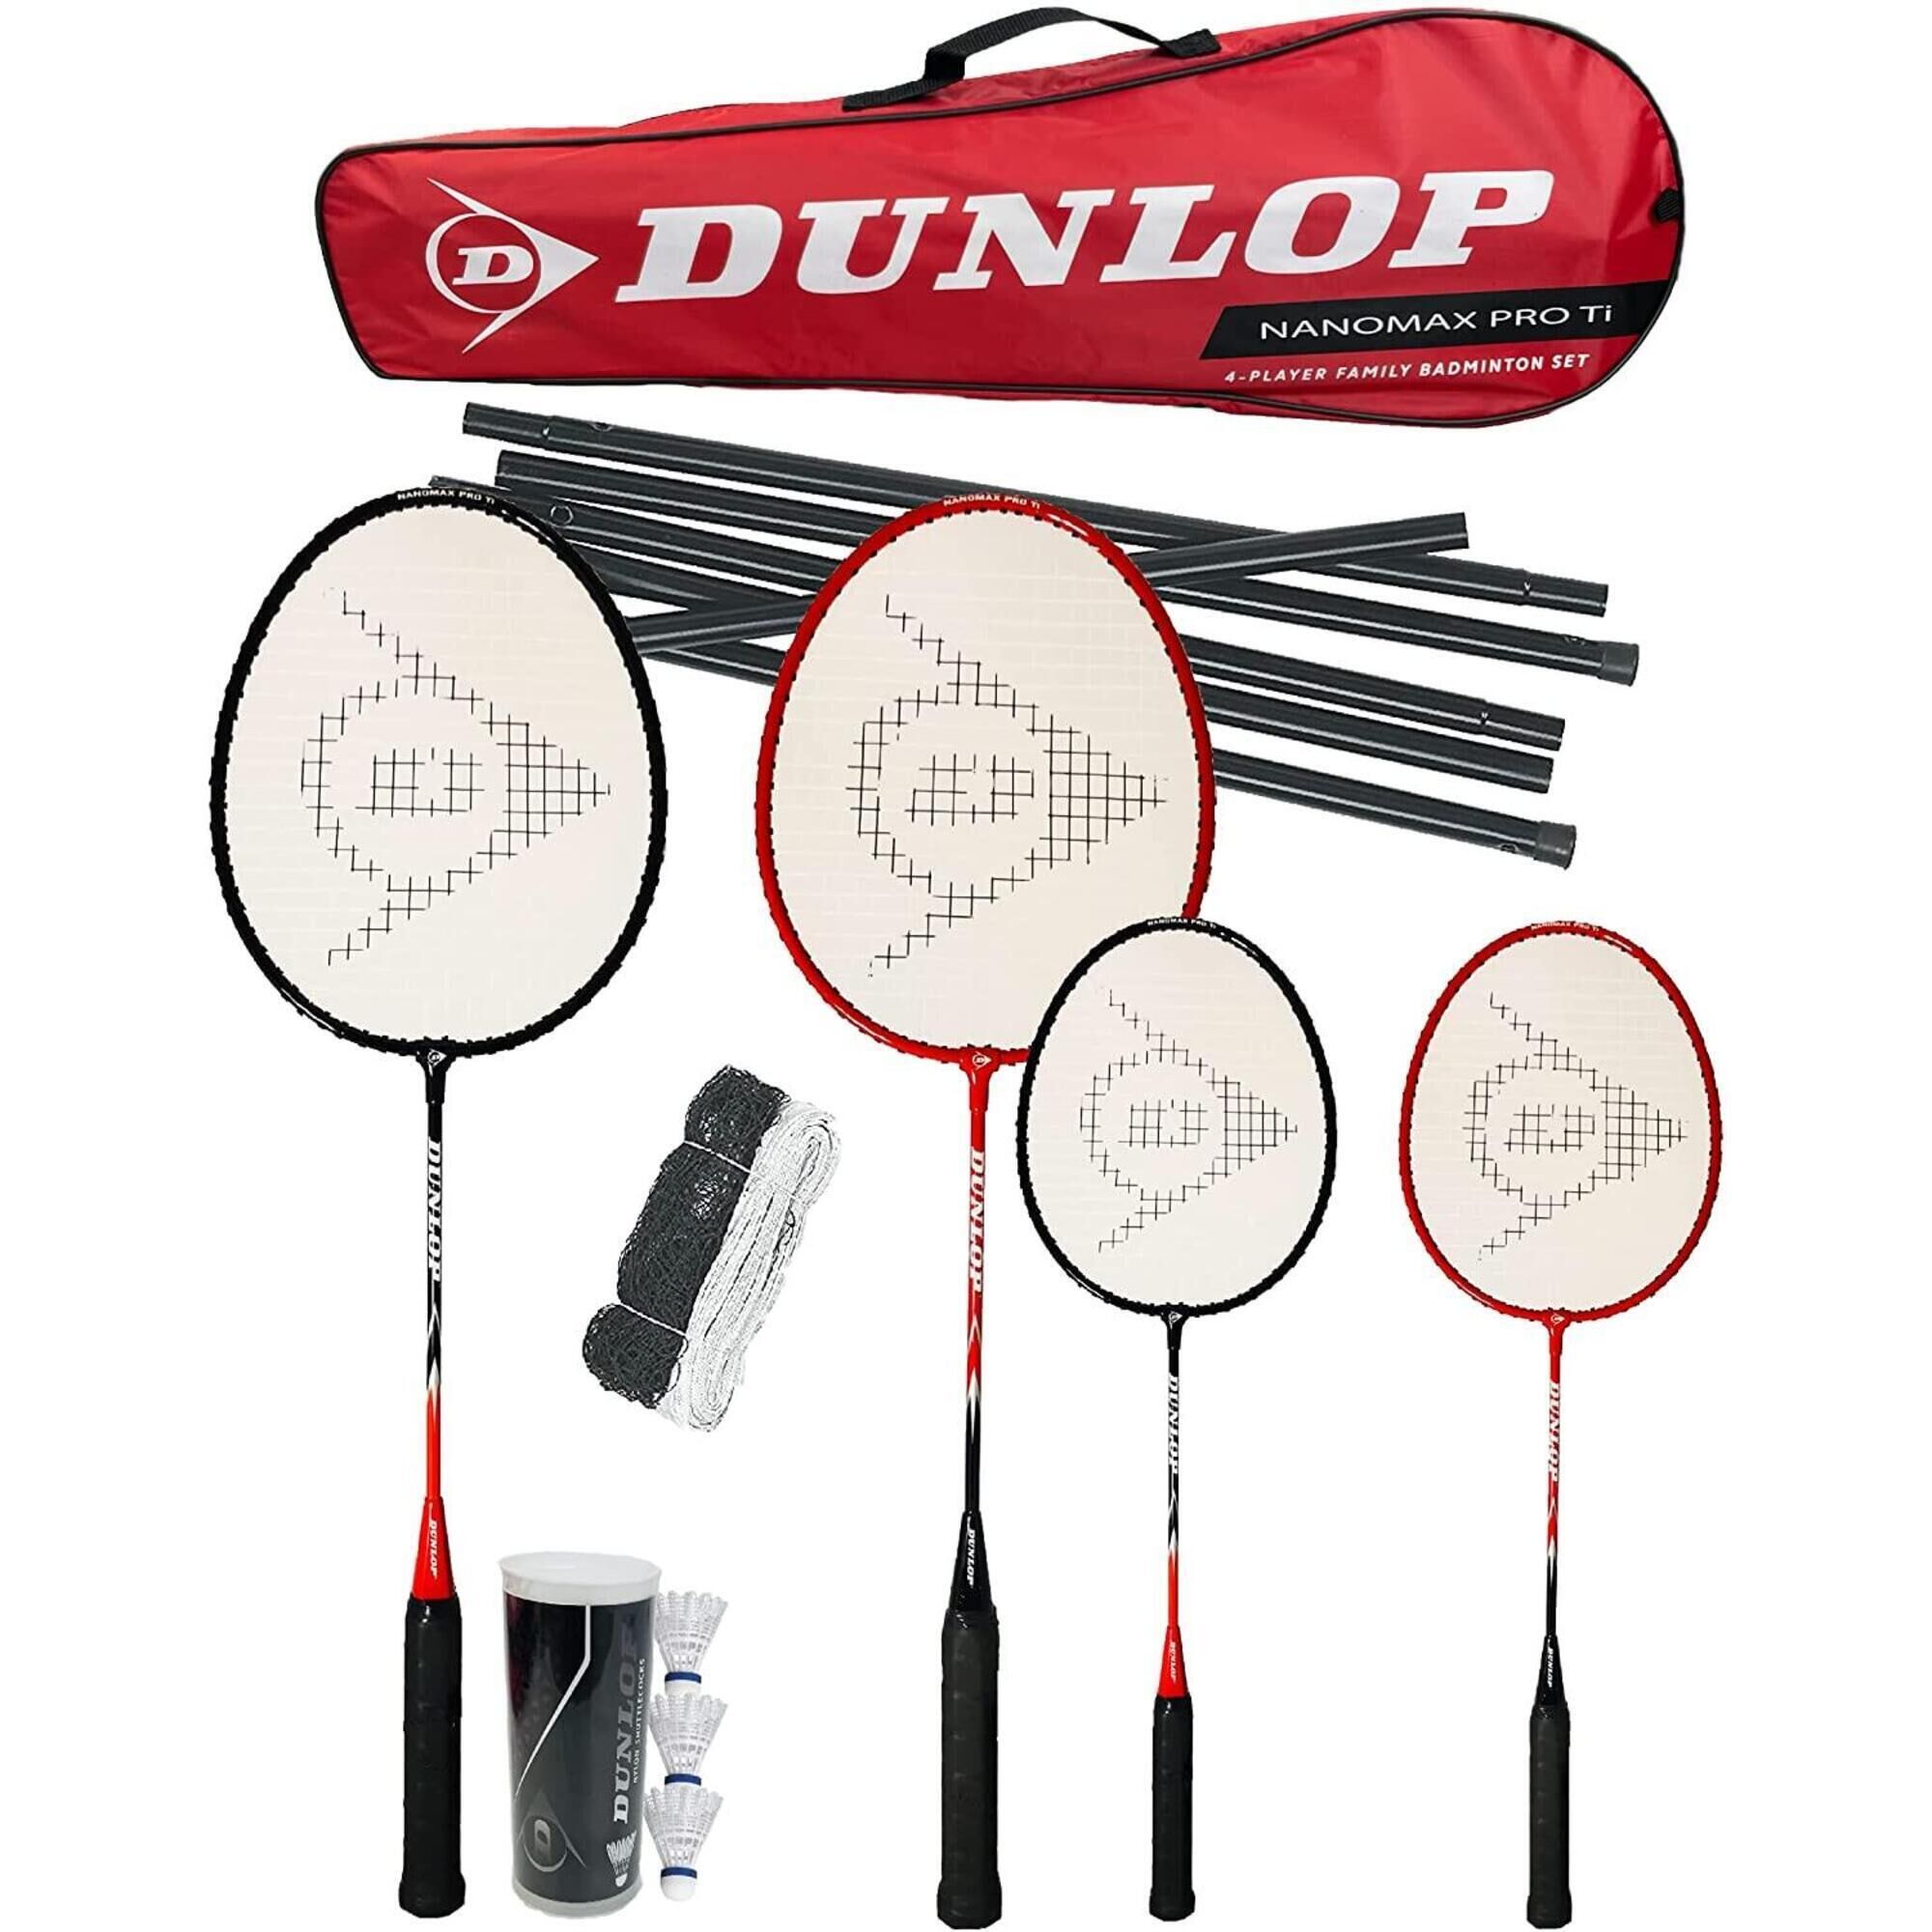 DUNLOP Dunlop Nanomax Pro Ti Family Badminton Set, inc 2 Adult, 2 Junior Rackets, Net,